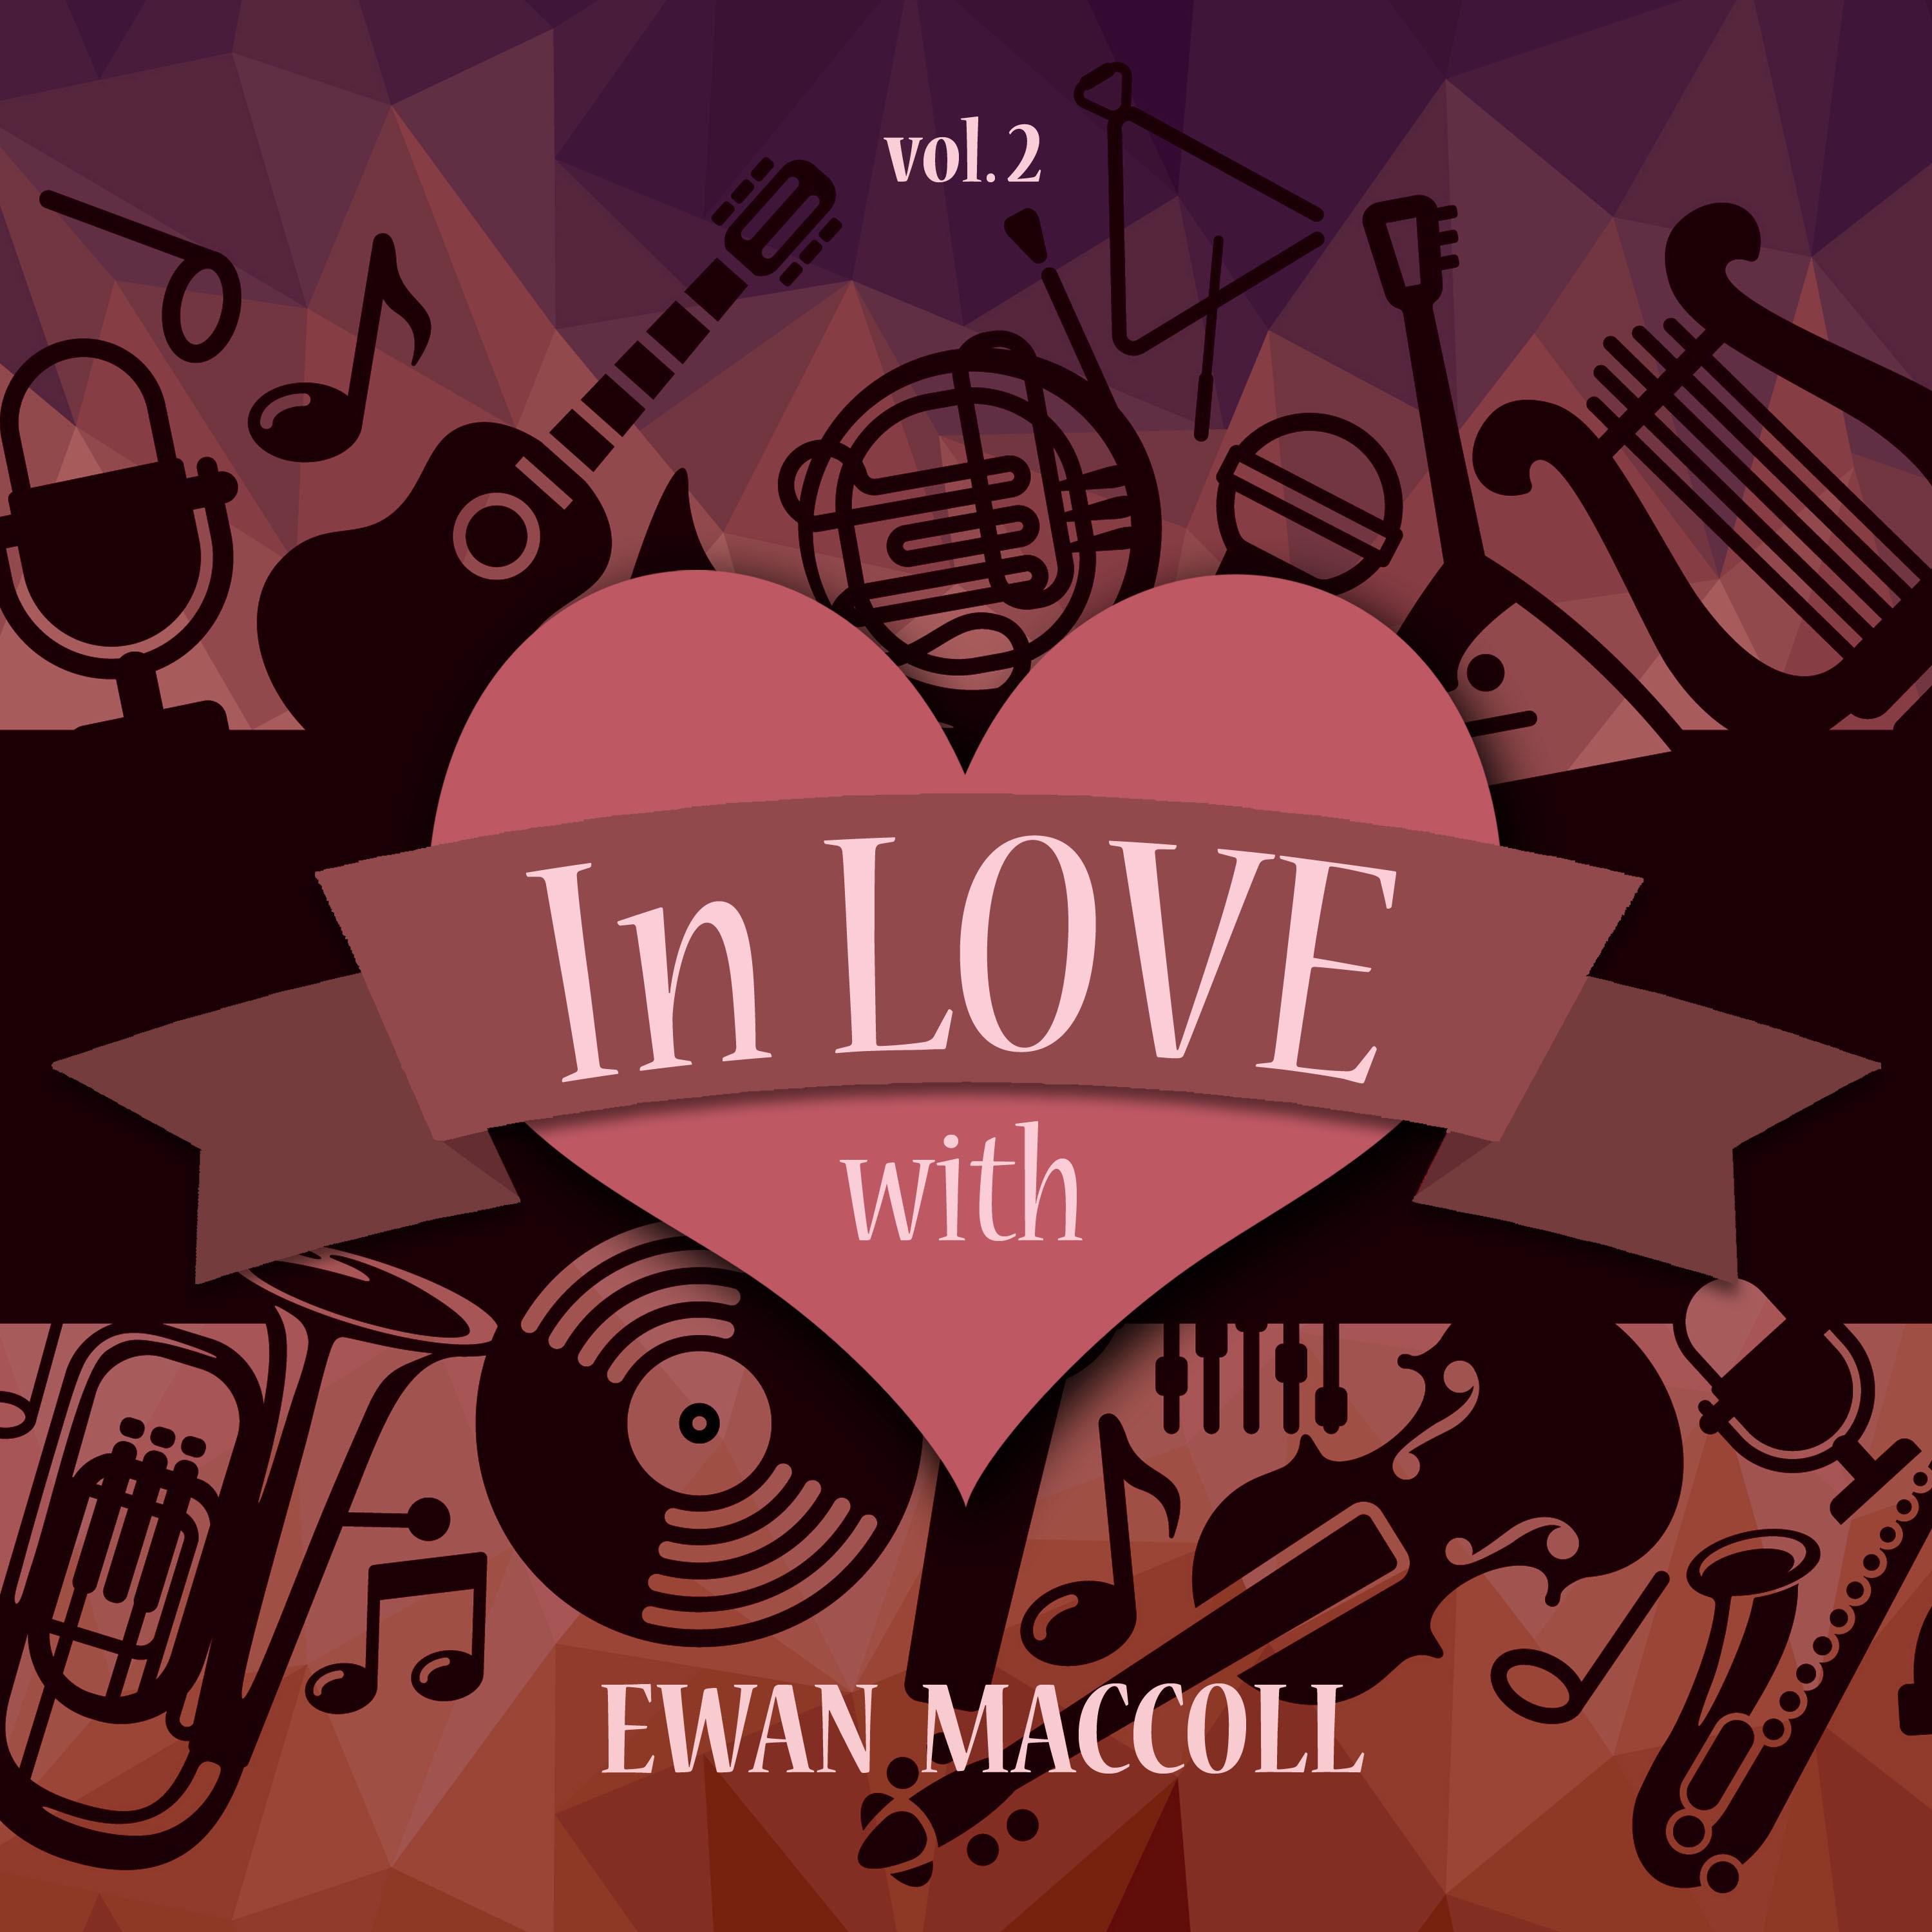 In Love with Ewan Maccoll, Vol. 2